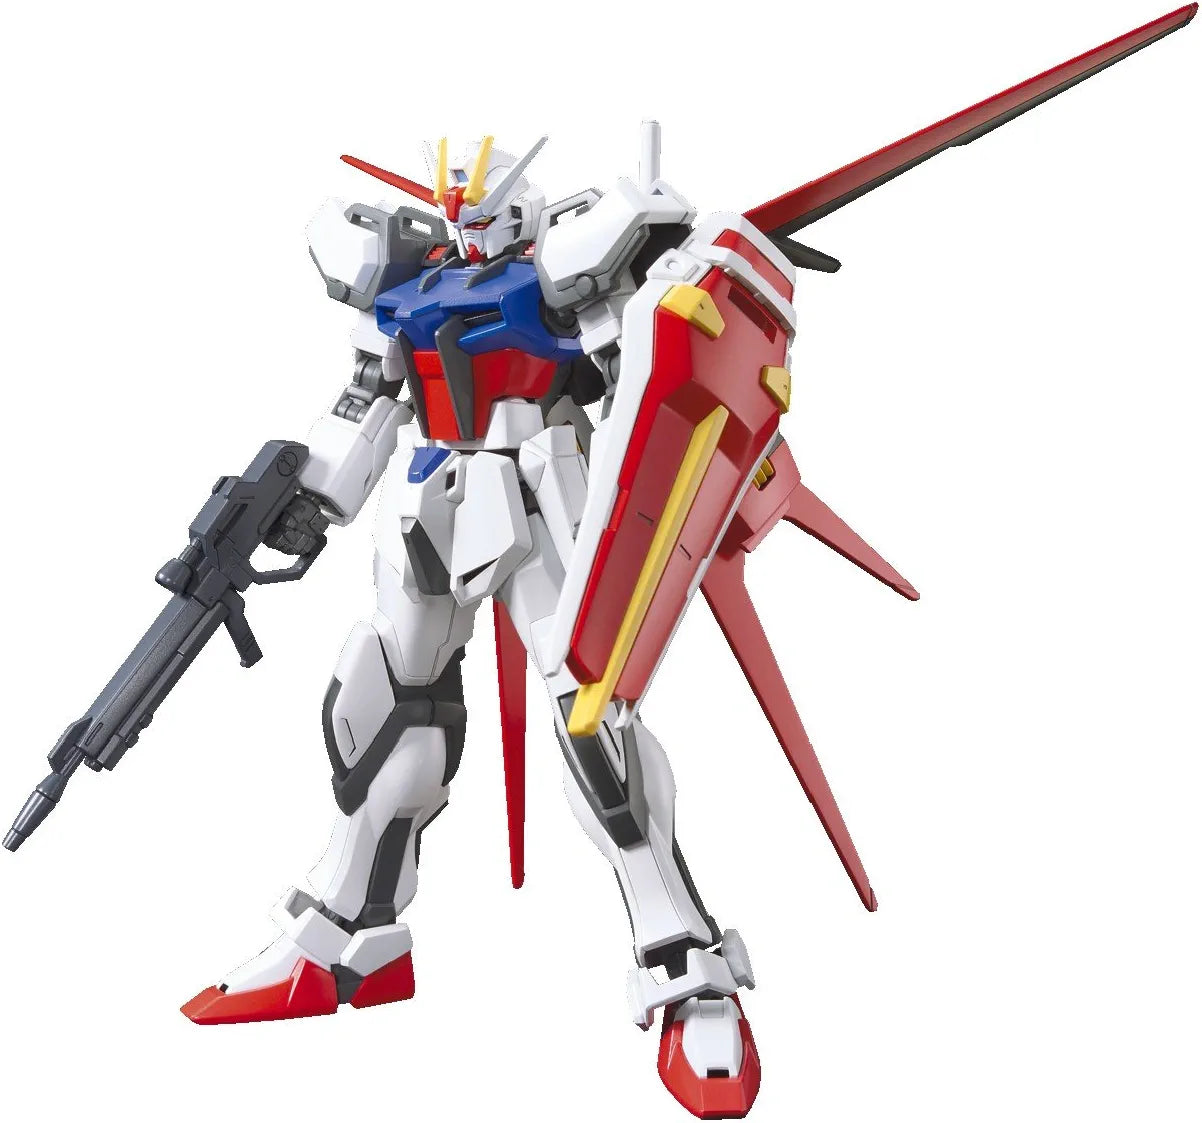 Bandai Hobby HGCE 171 Aile Strike Gundam Model Kit (1/144 Scale) - Bards & Cards